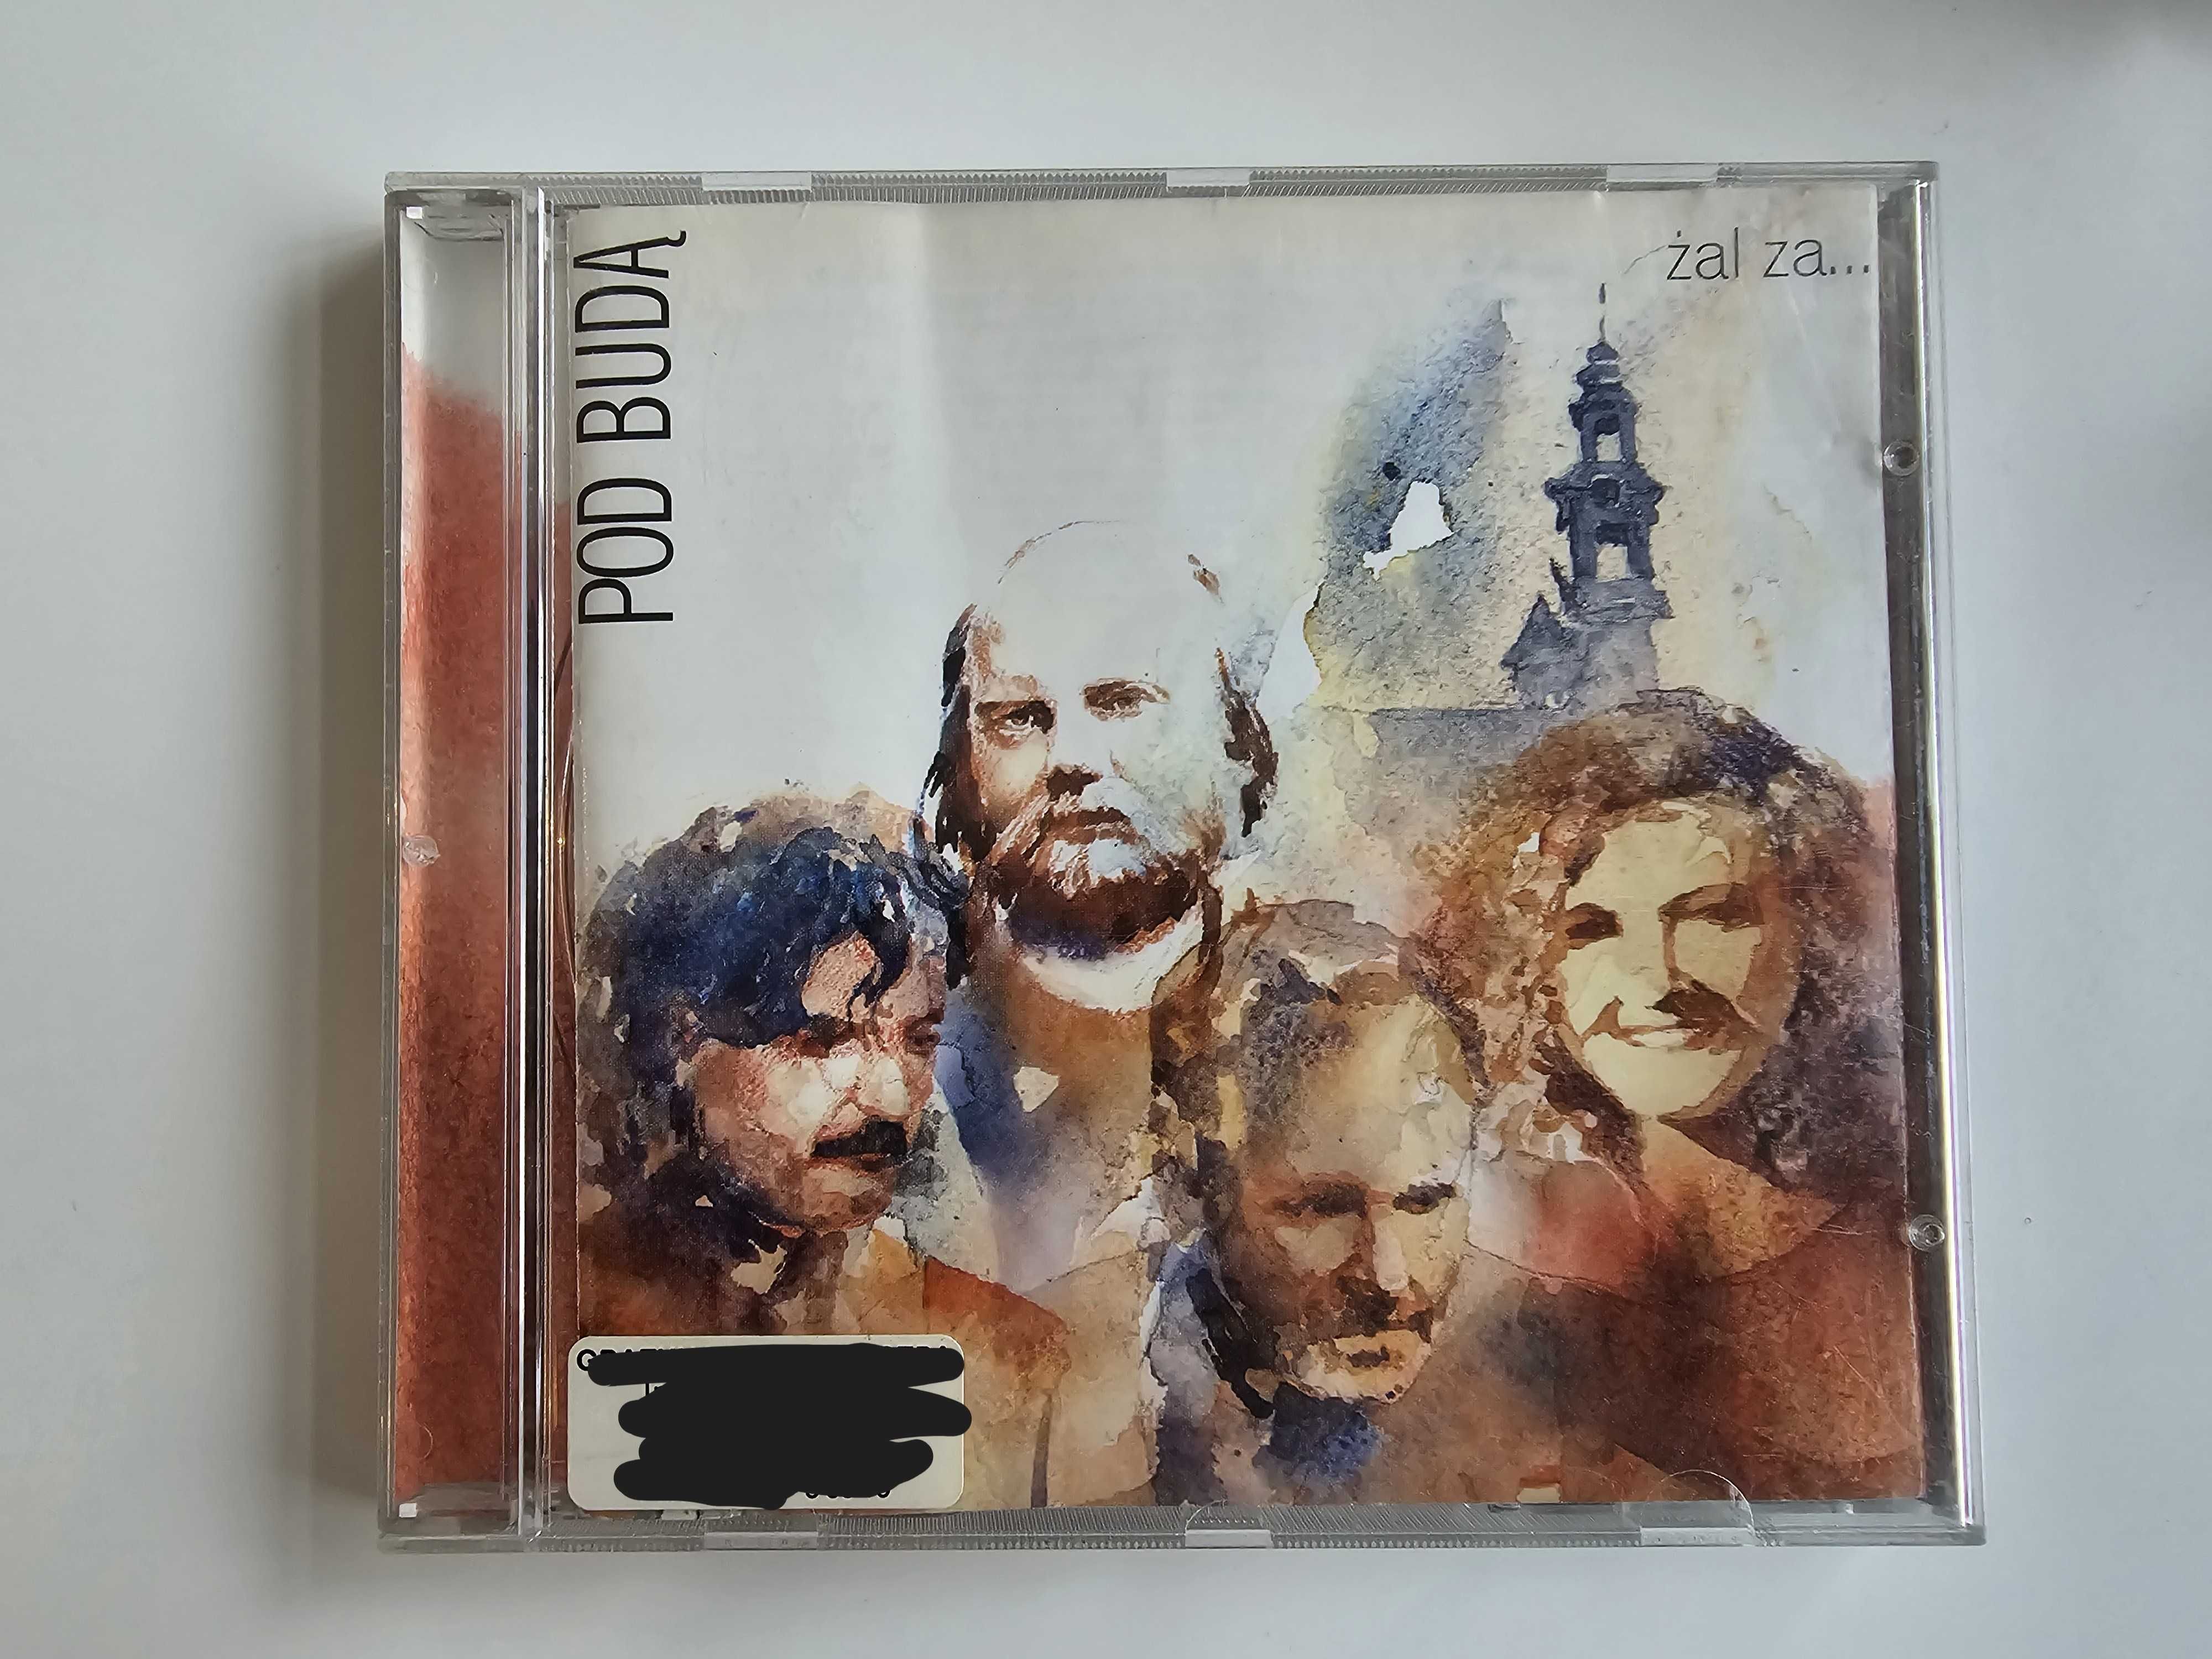 POD BUDĄ Żal za… CD 1998